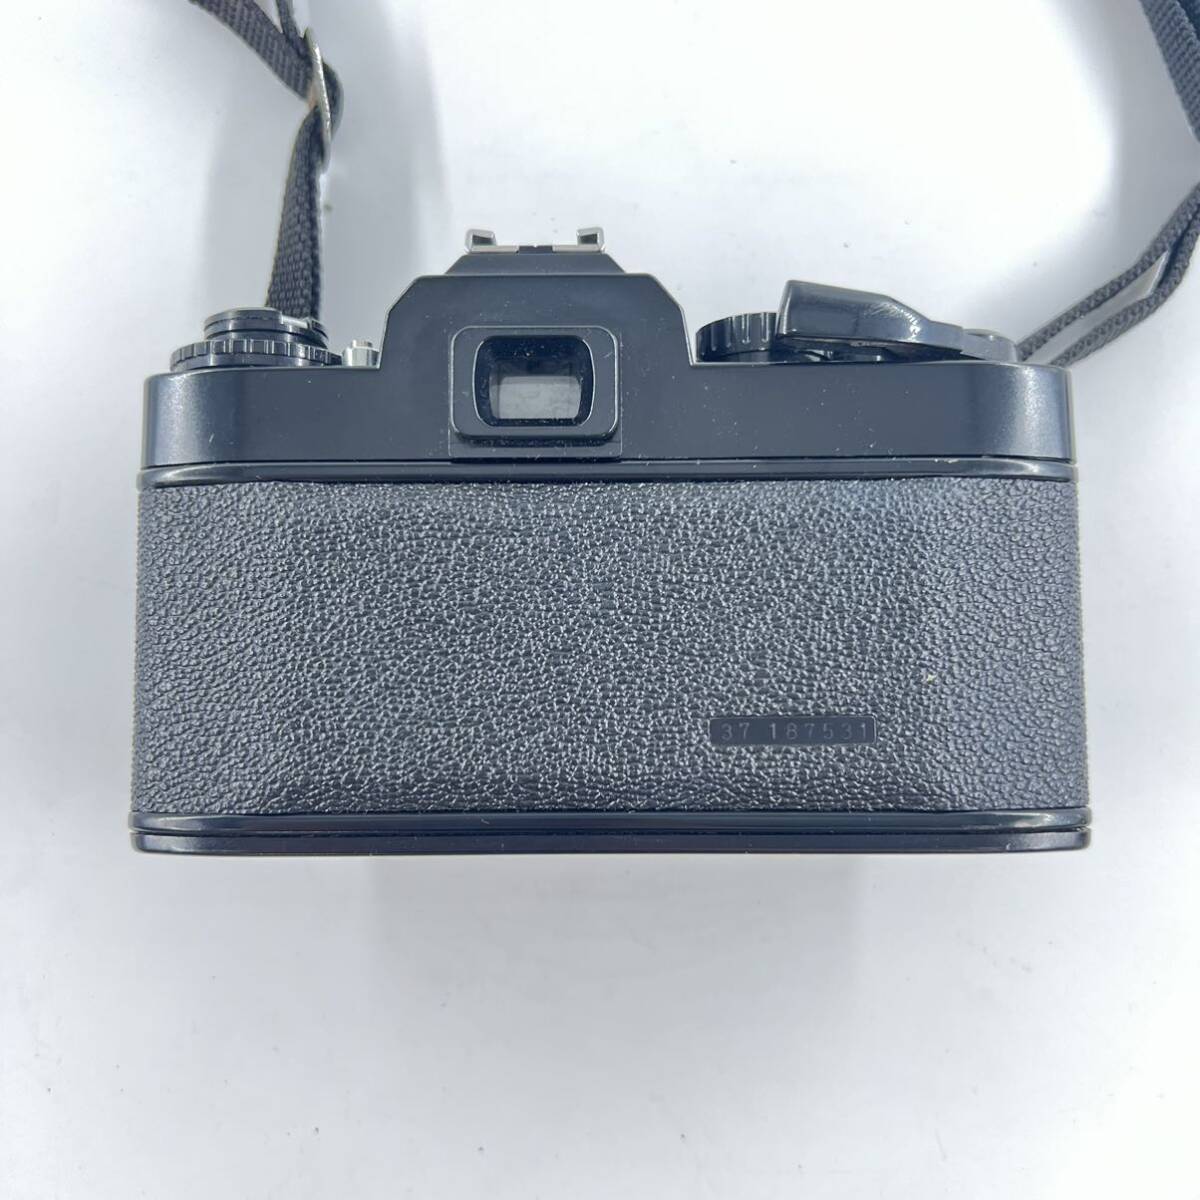 U4 RICOH リコー XR500 RIKENON 1:2 50mm MC SKYLIGHT 1B 52mm フィルムカメラ カメラ シャッター音OK _画像5